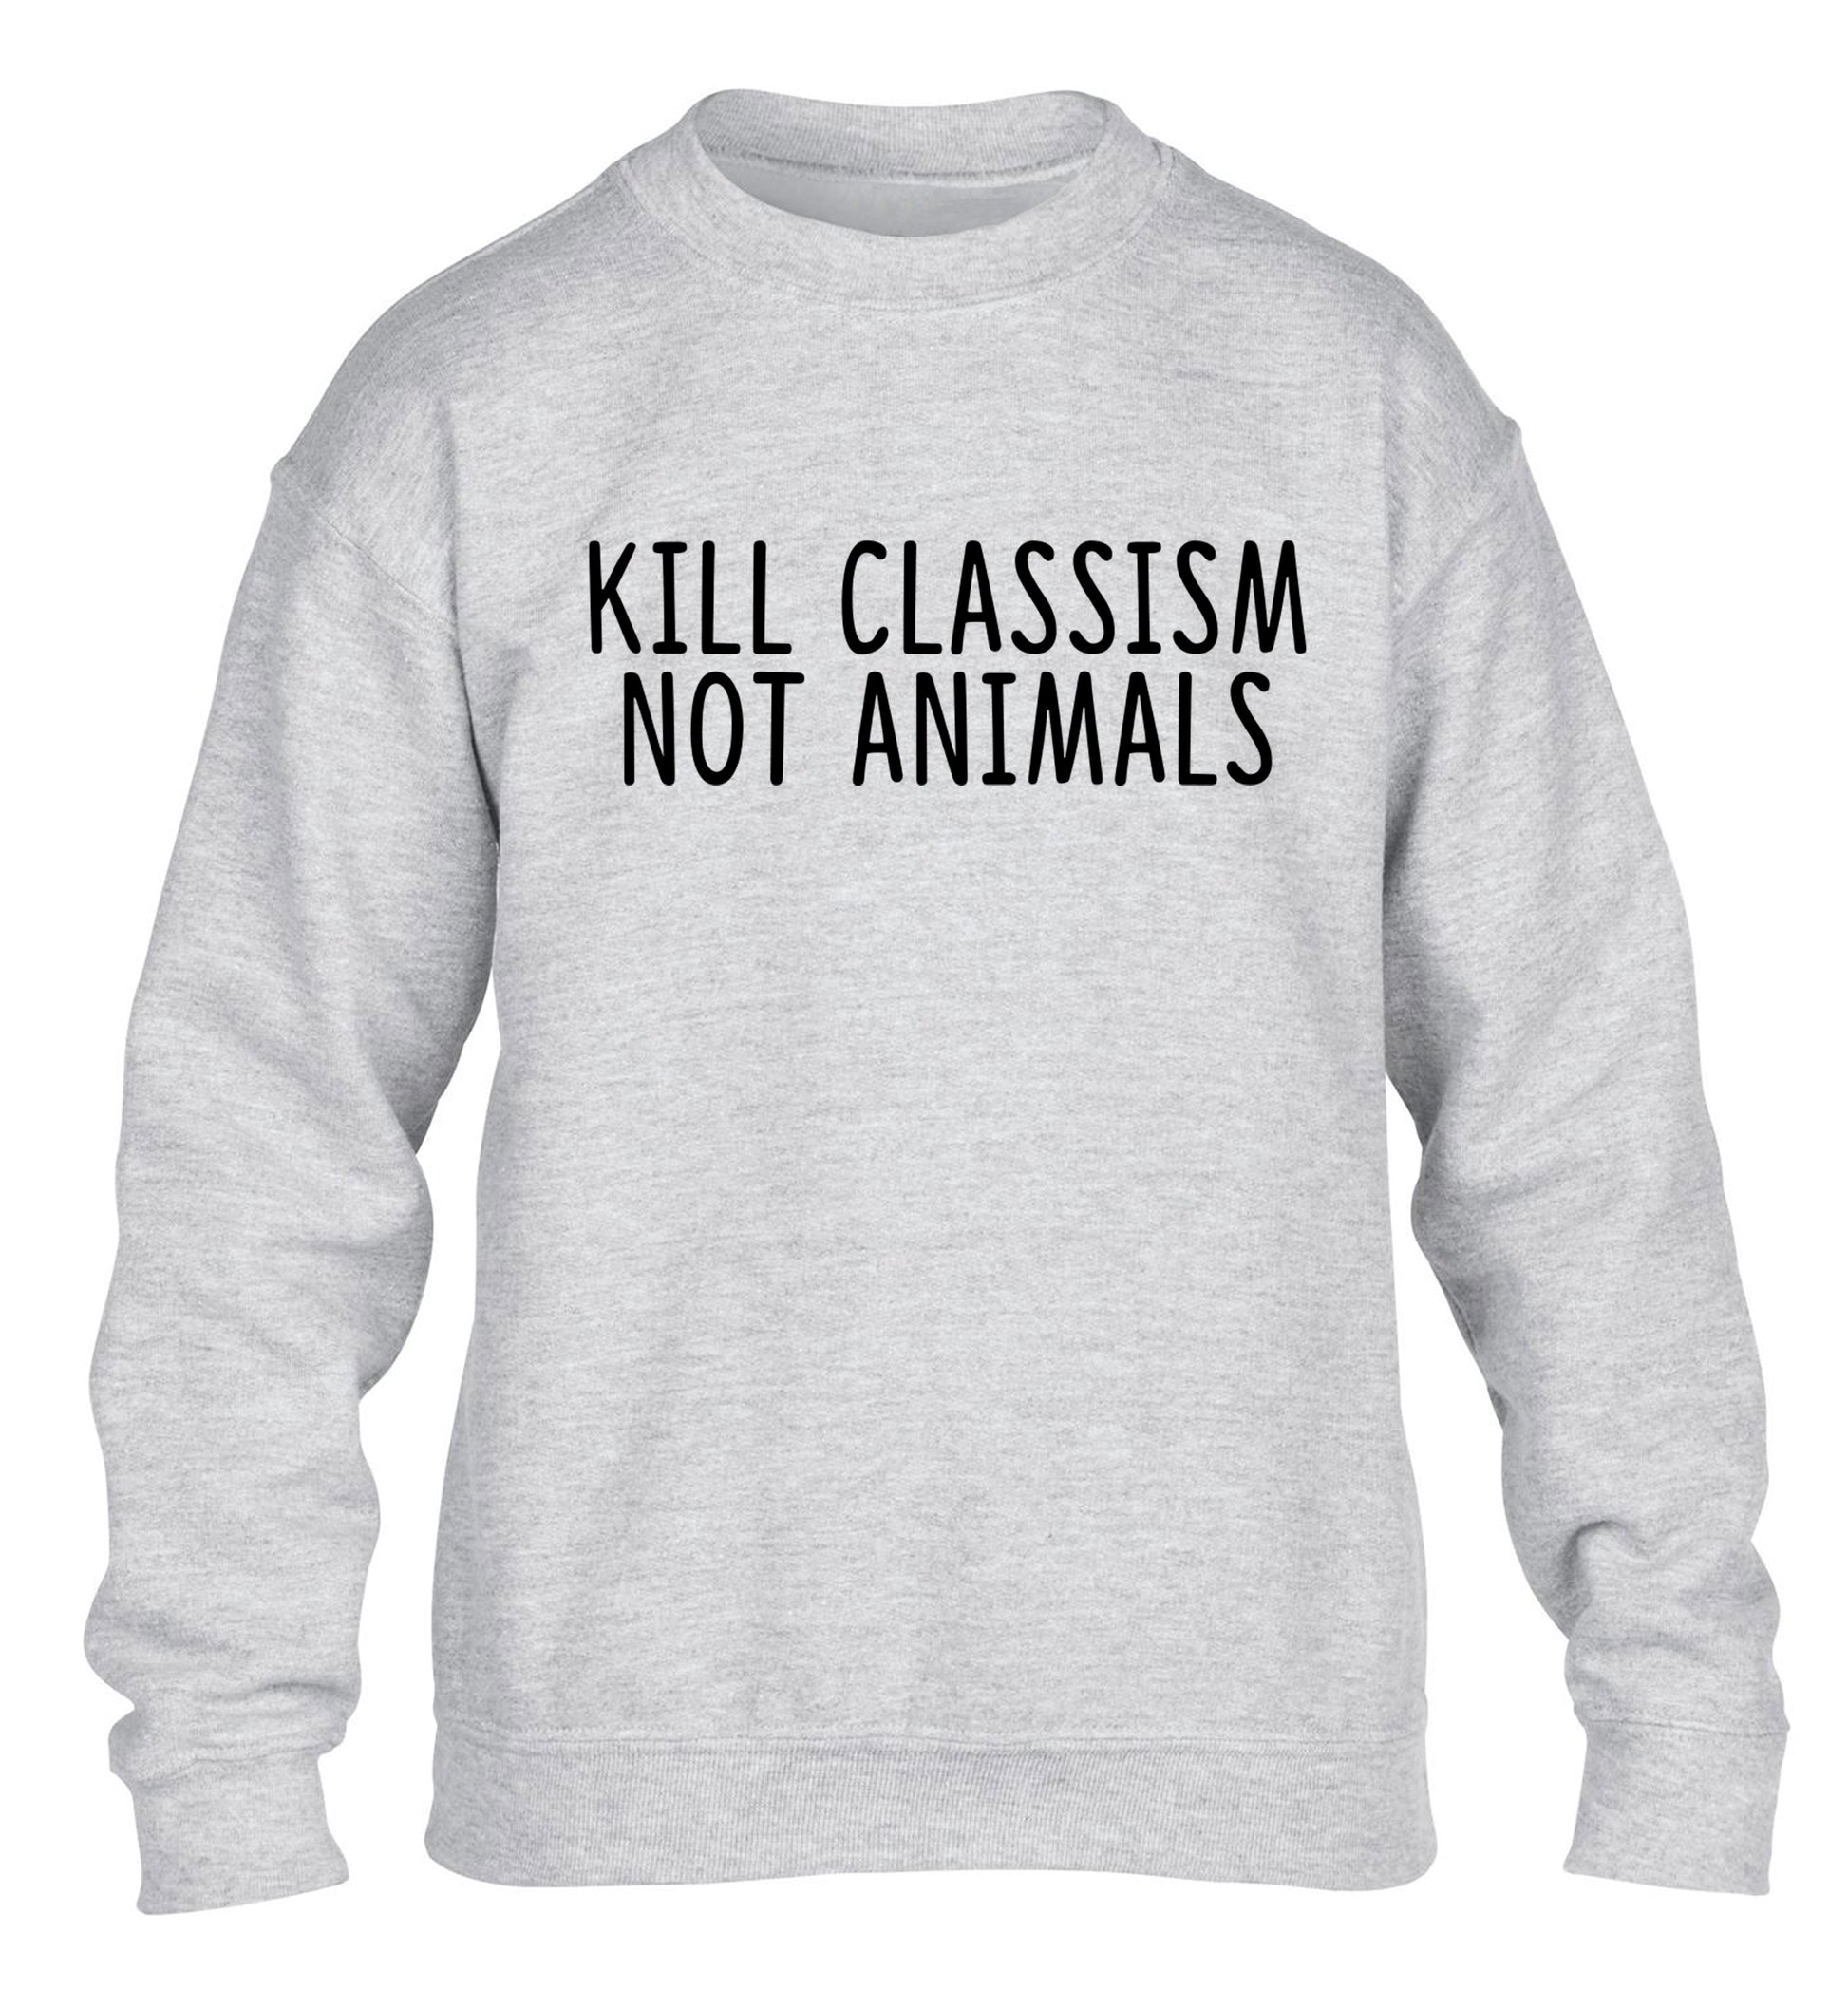 Kill Classism Not Animals children's grey sweater 12-13 Years